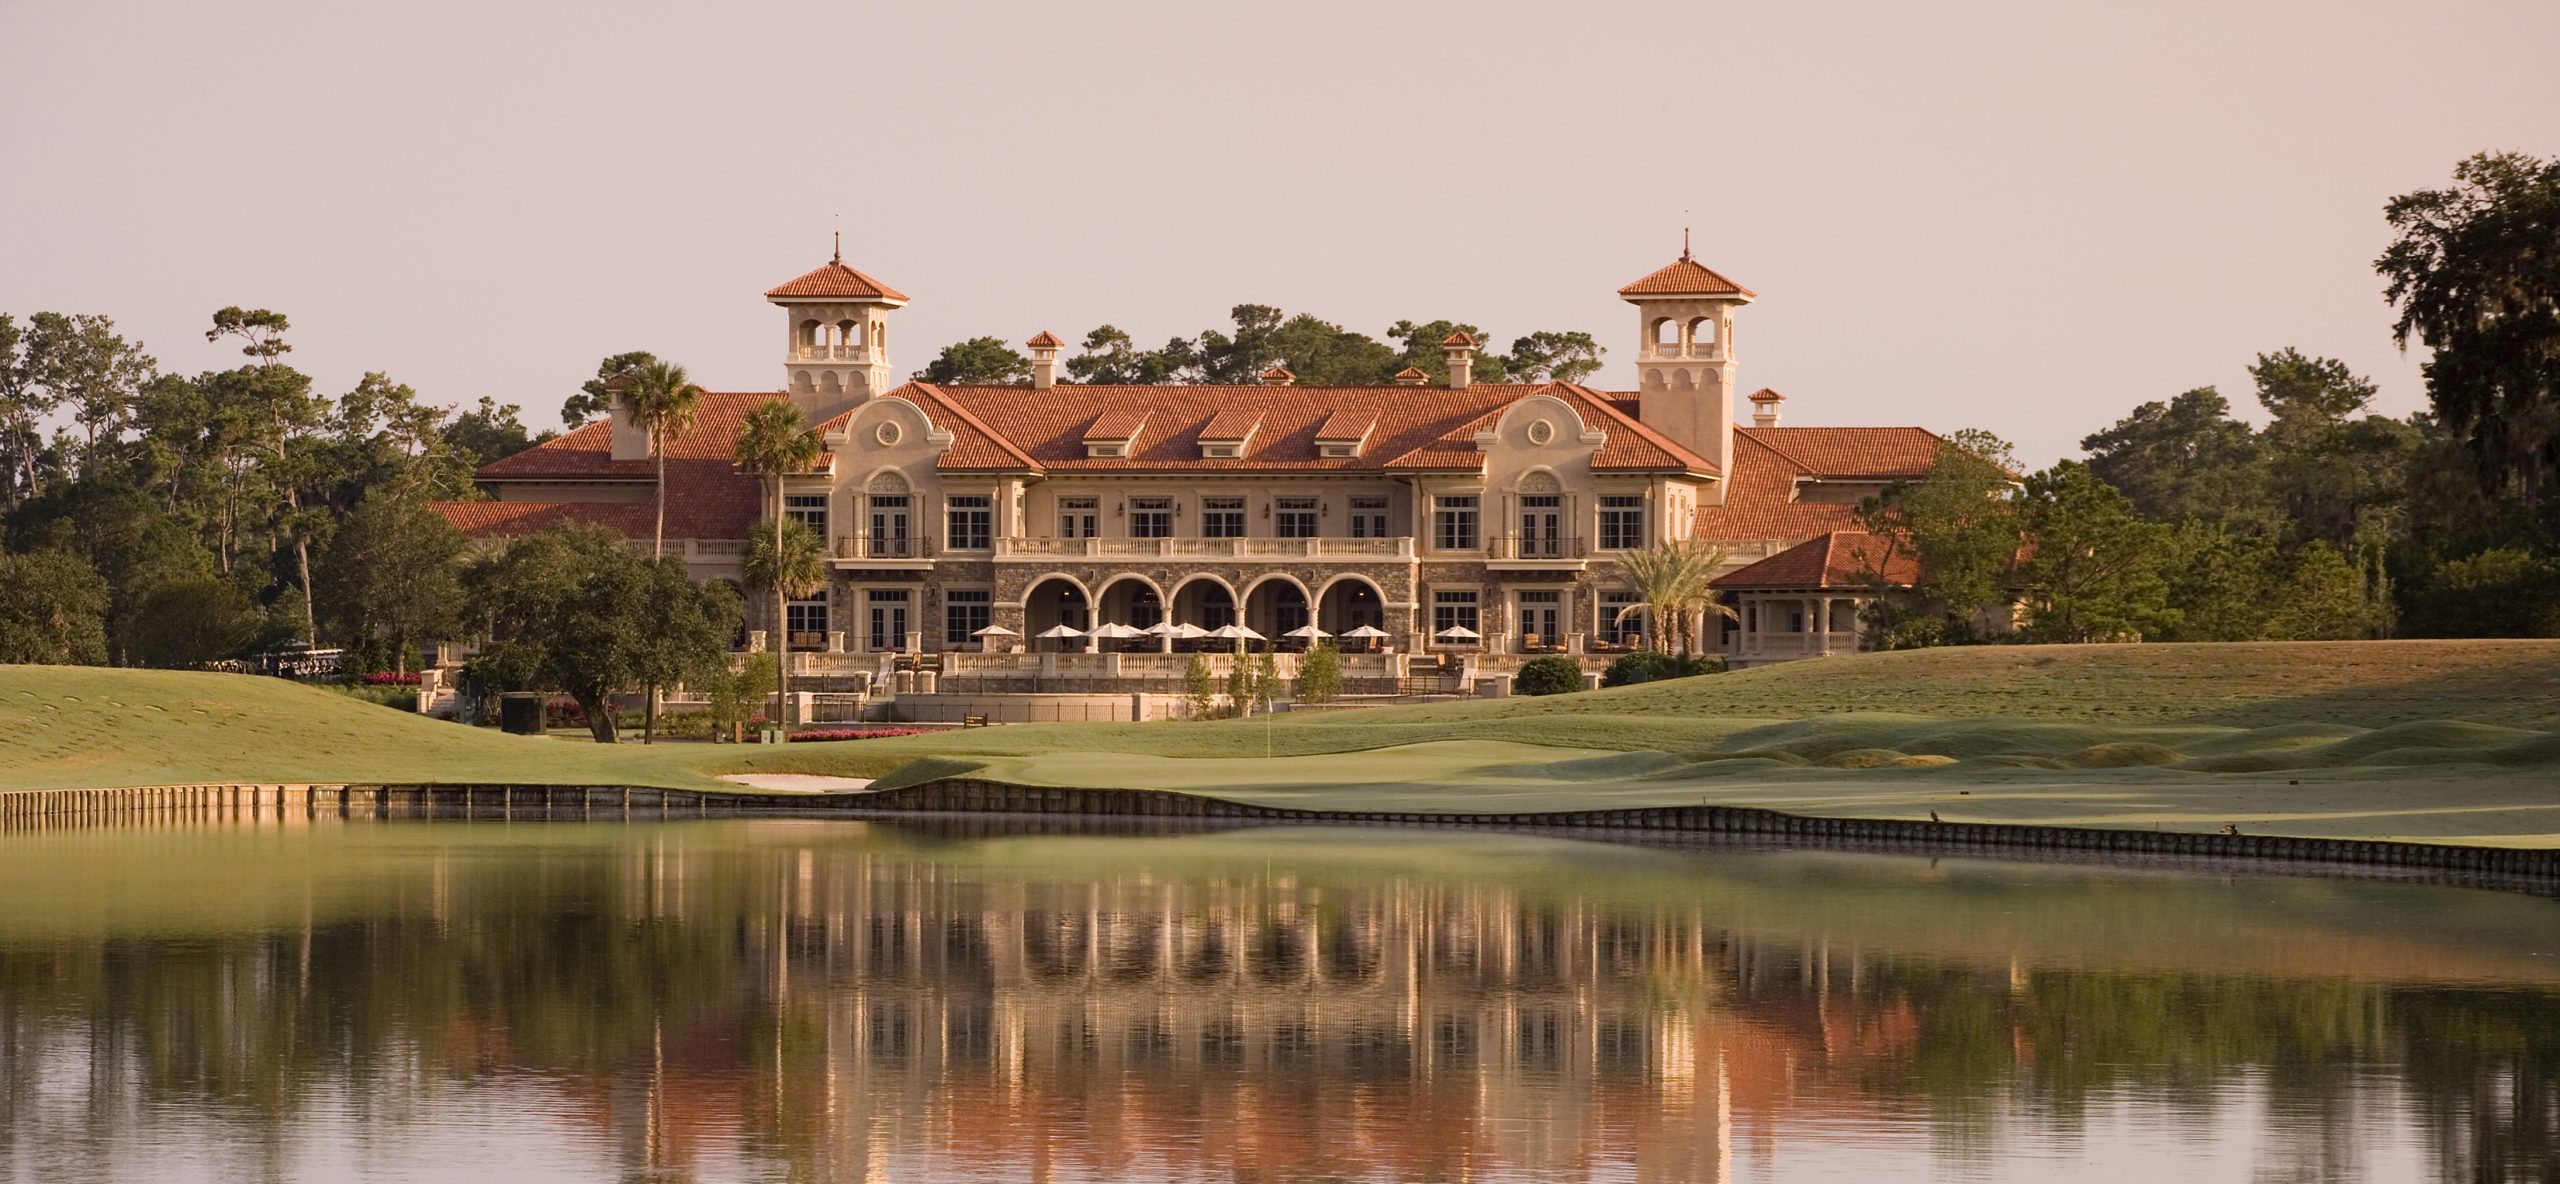 The frontage of Sawgrass Marriott Golf Resort